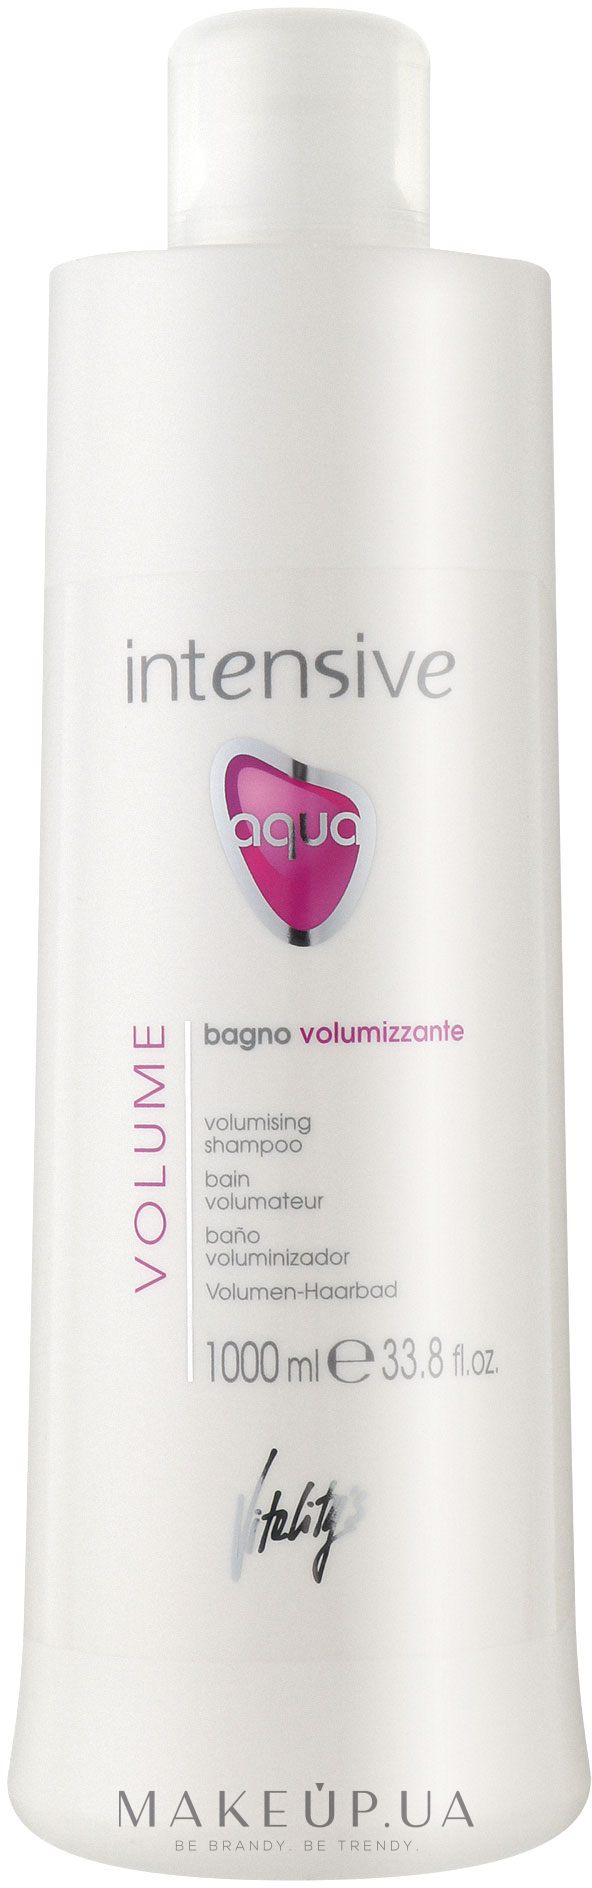 Шампунь для об'єму волосся - vitality's Intensive Aqua Volumising Shampoo — фото 1000ml